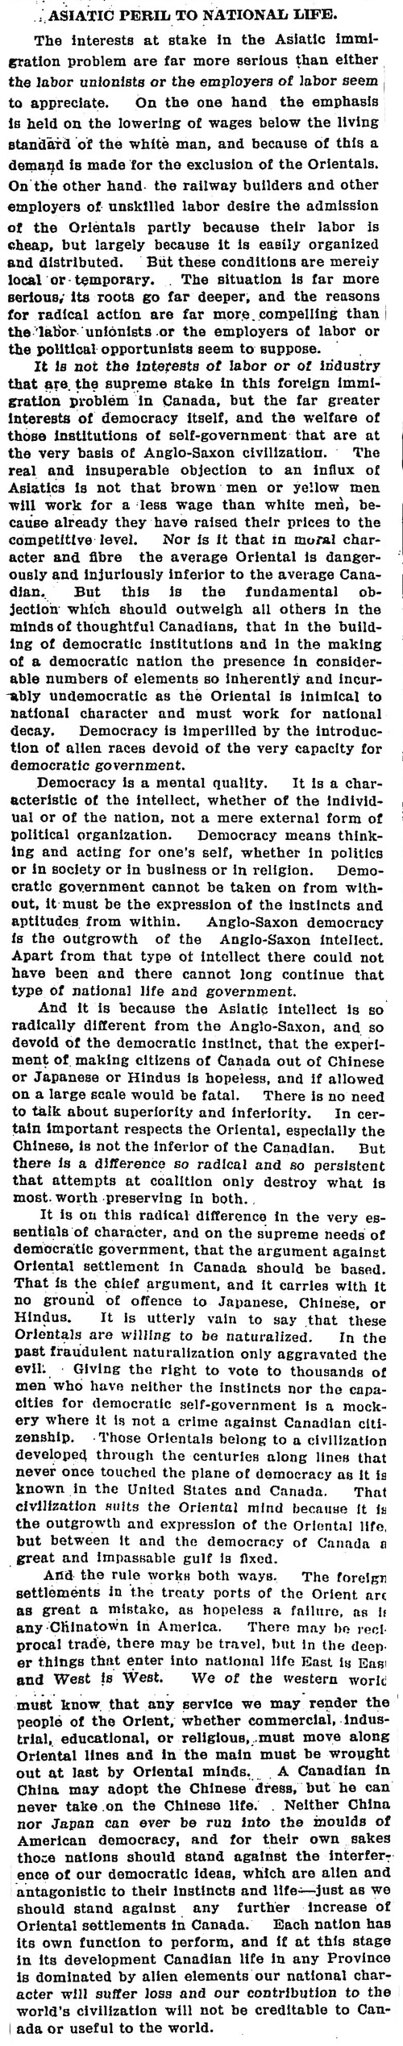 globe 1907-10-11 asiatic peril editorial